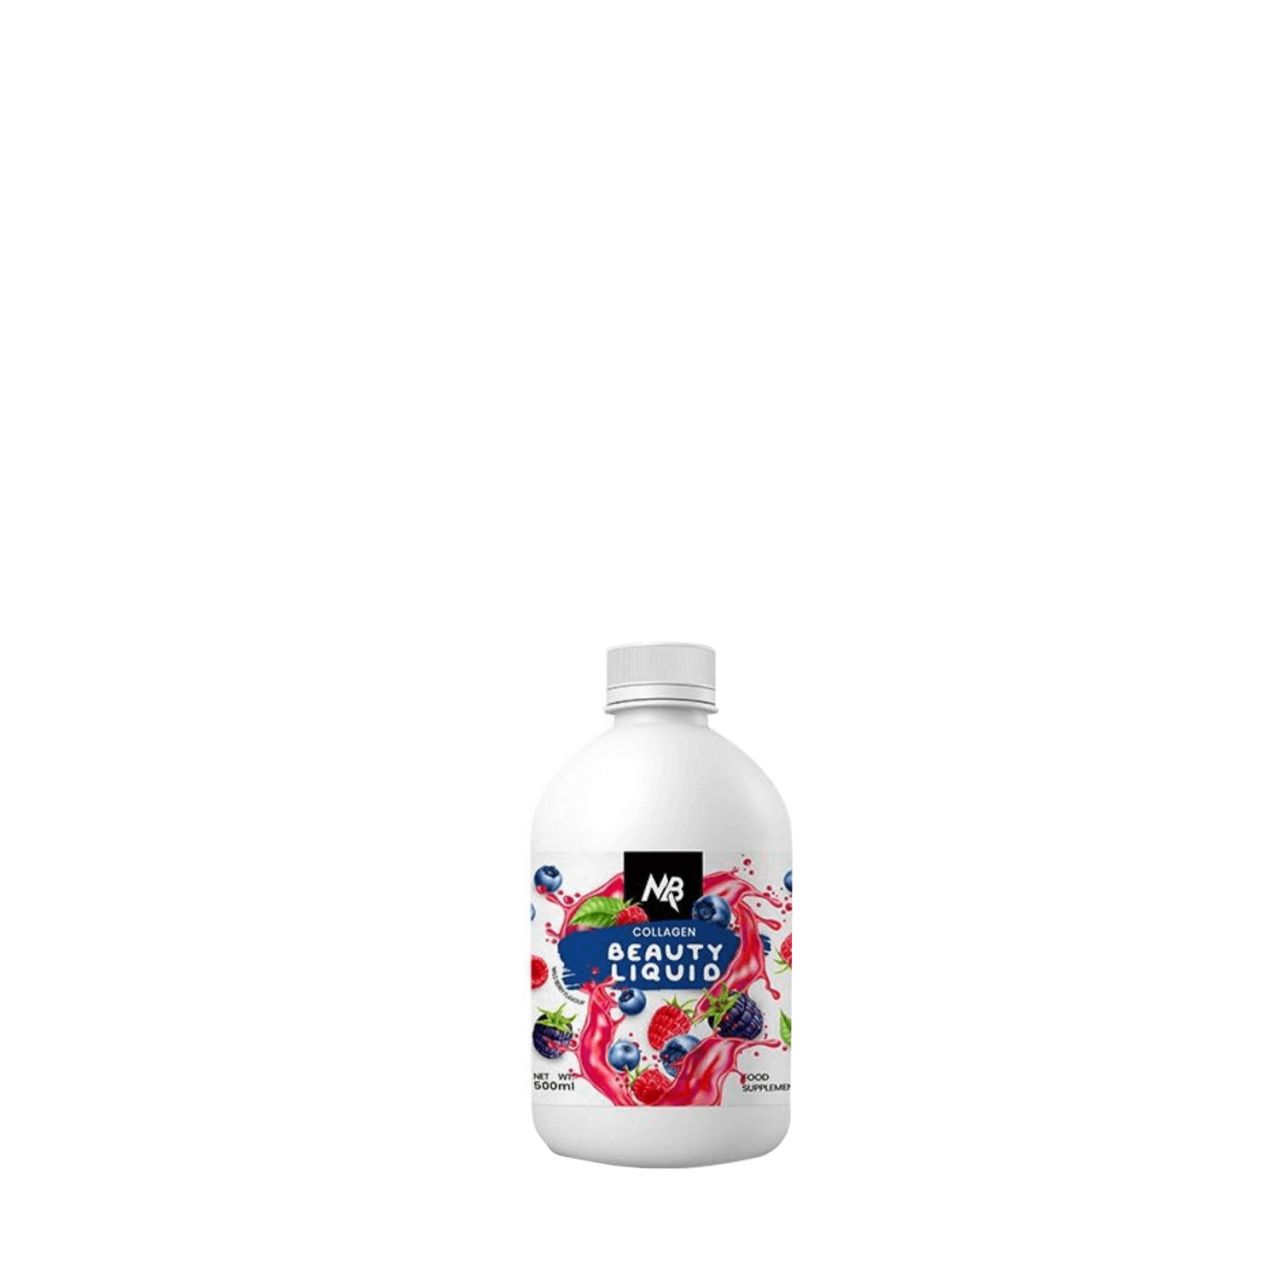 Kollagénital, Magic Body Beauty Liquid, 500 ml